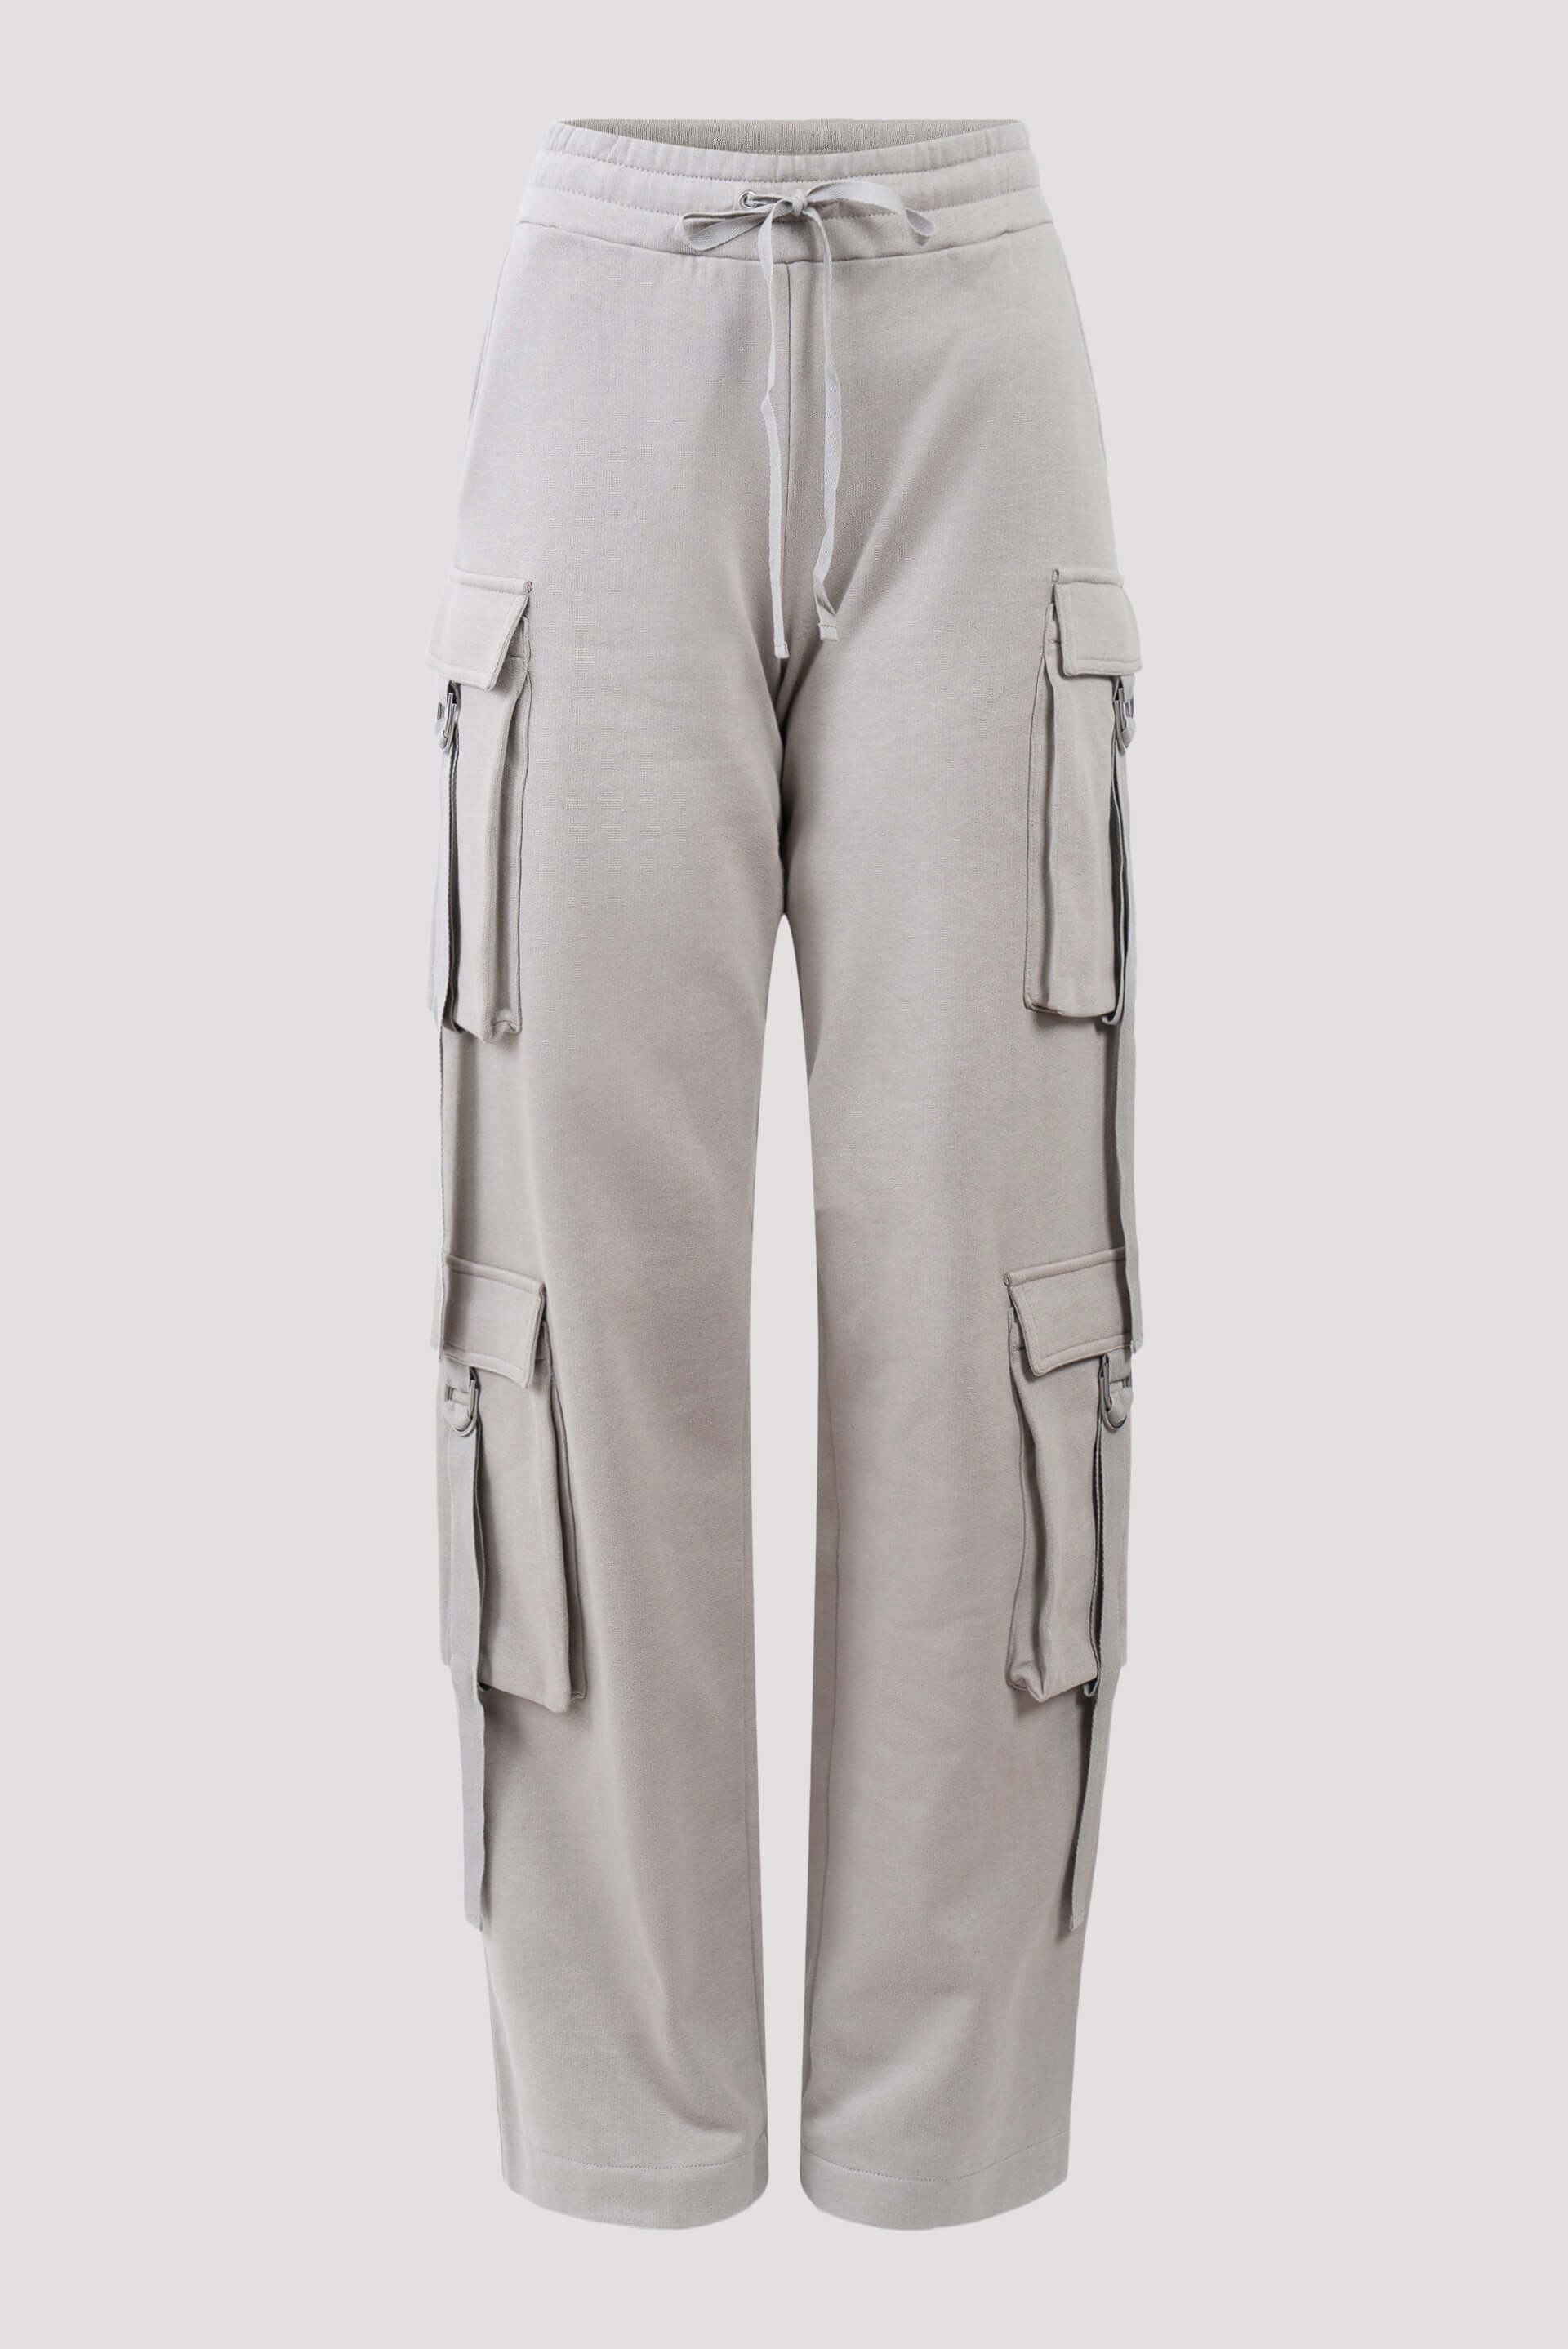 Buy Cheap Replica Louis Vuitton Pants for Louis Vuitton Short